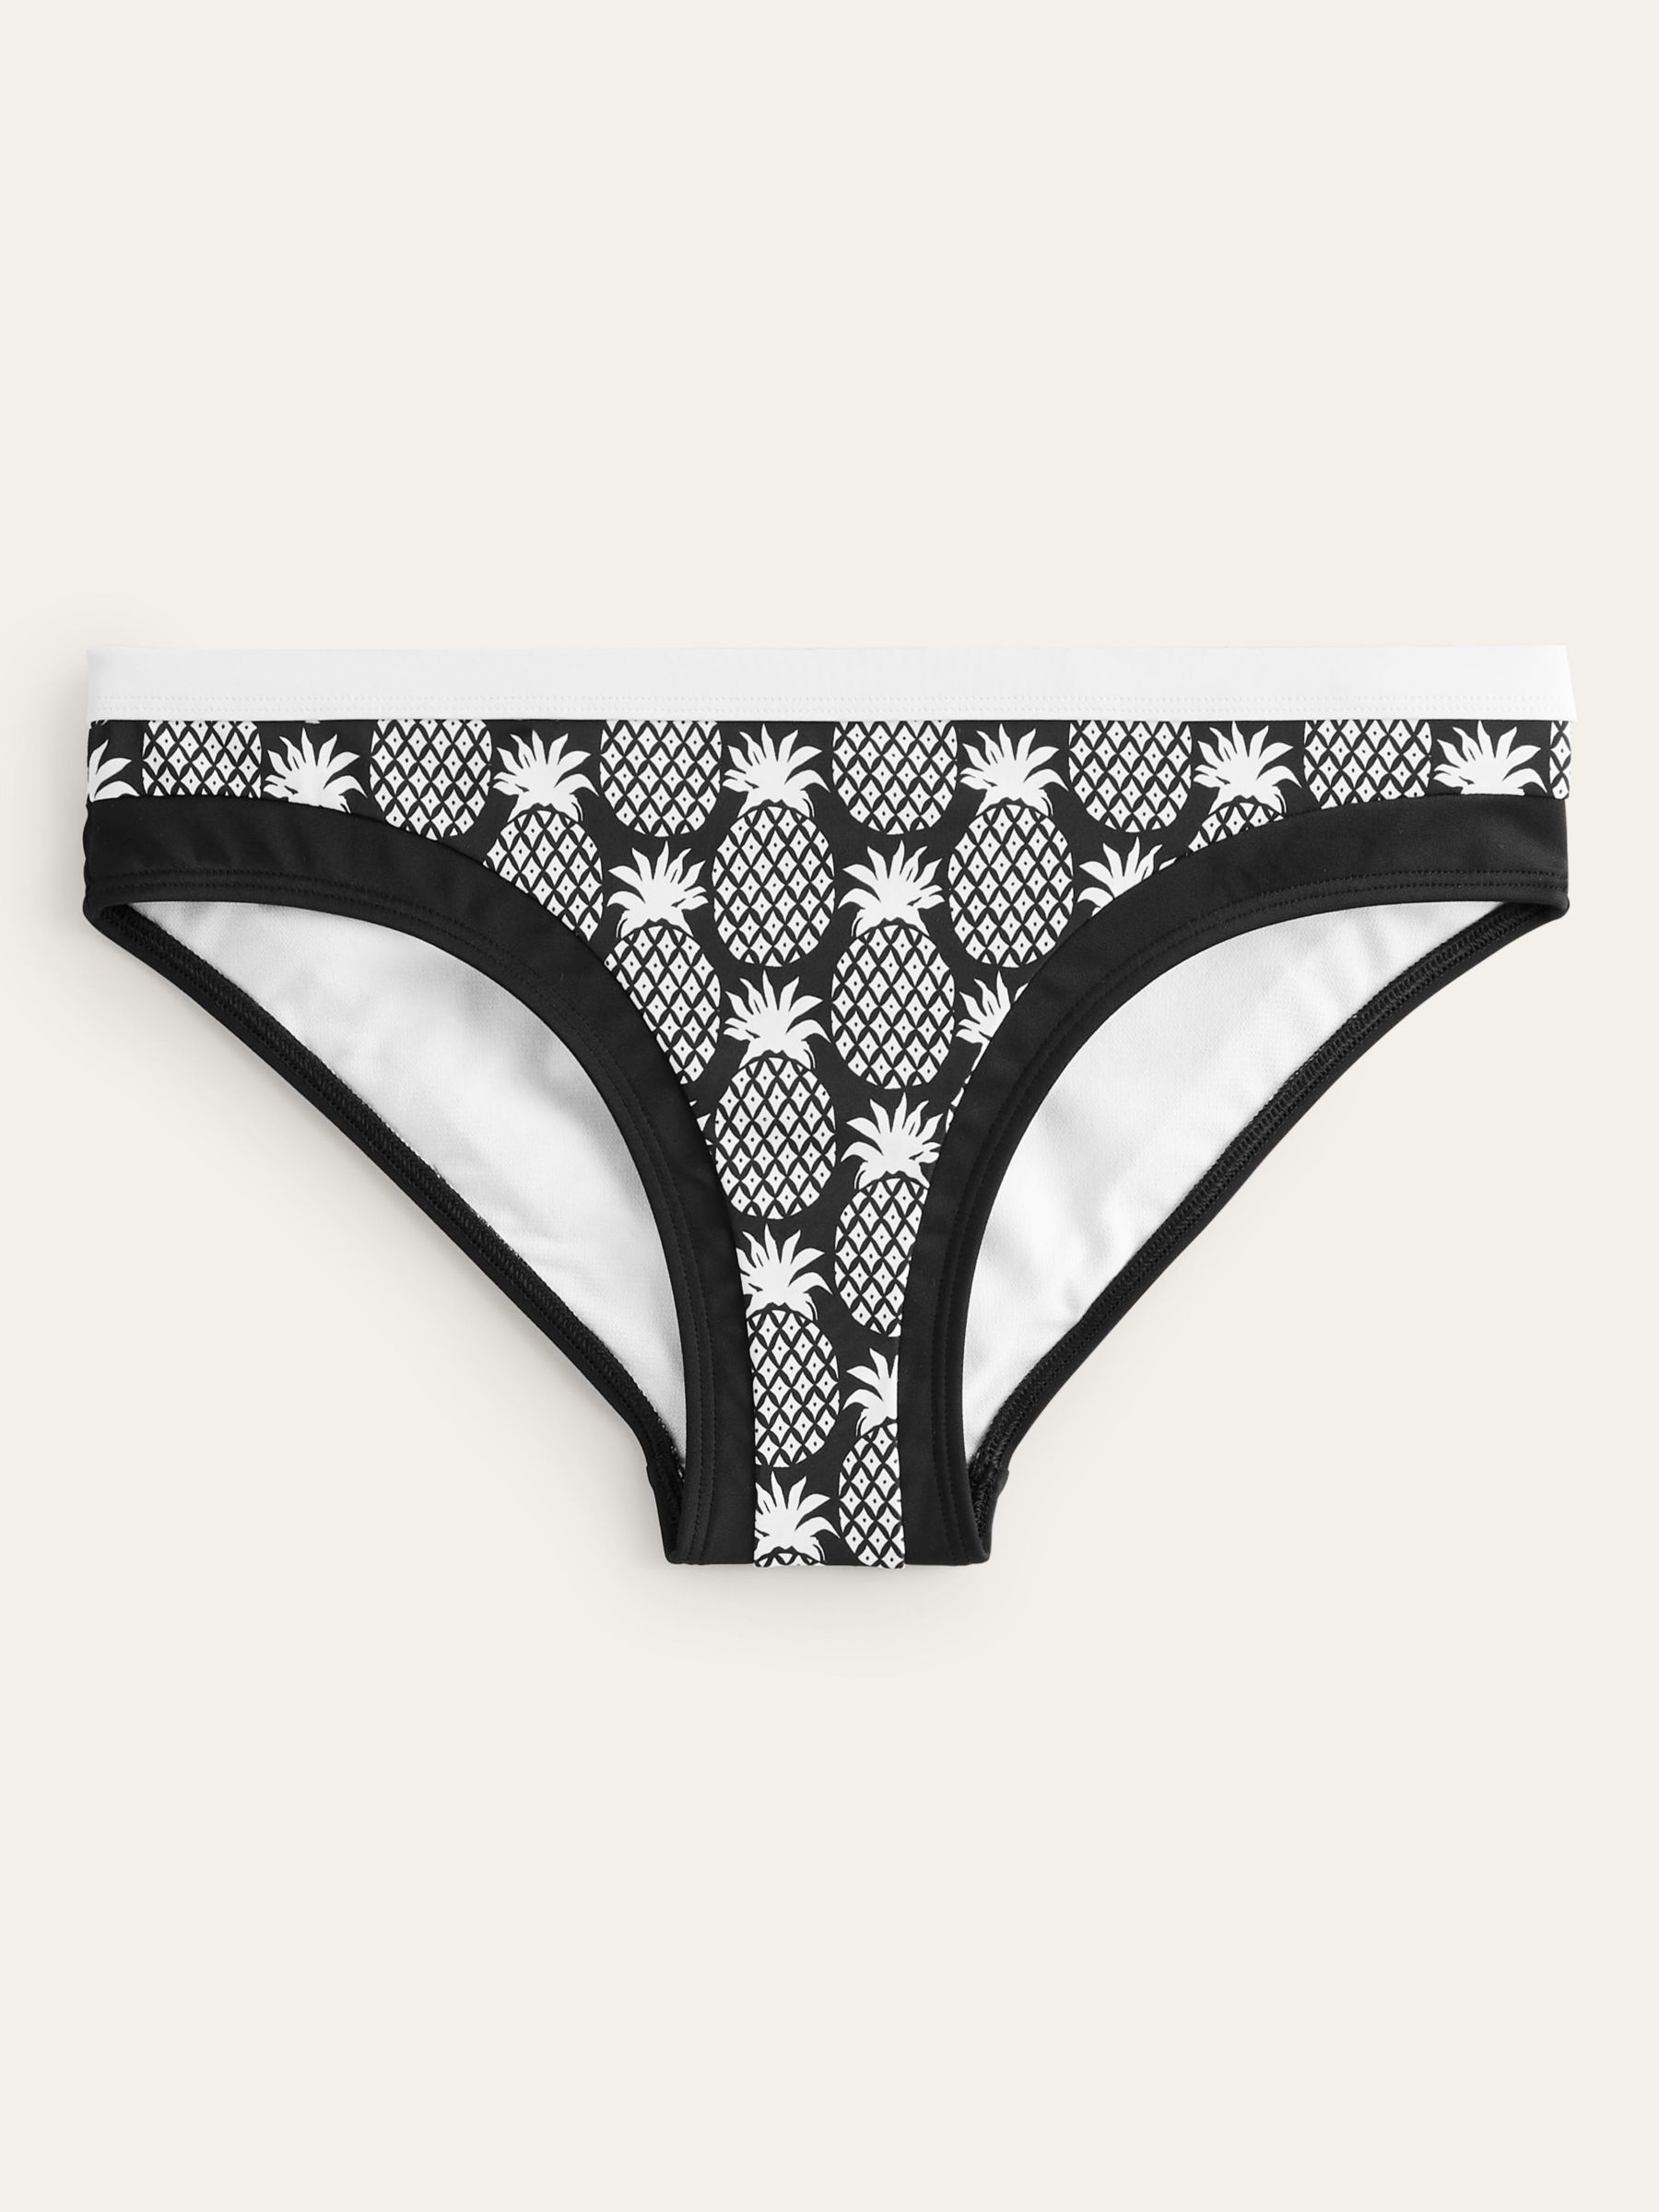 Boden Santorini Bikini Bottoms, Black/Pineapple Geo, 16